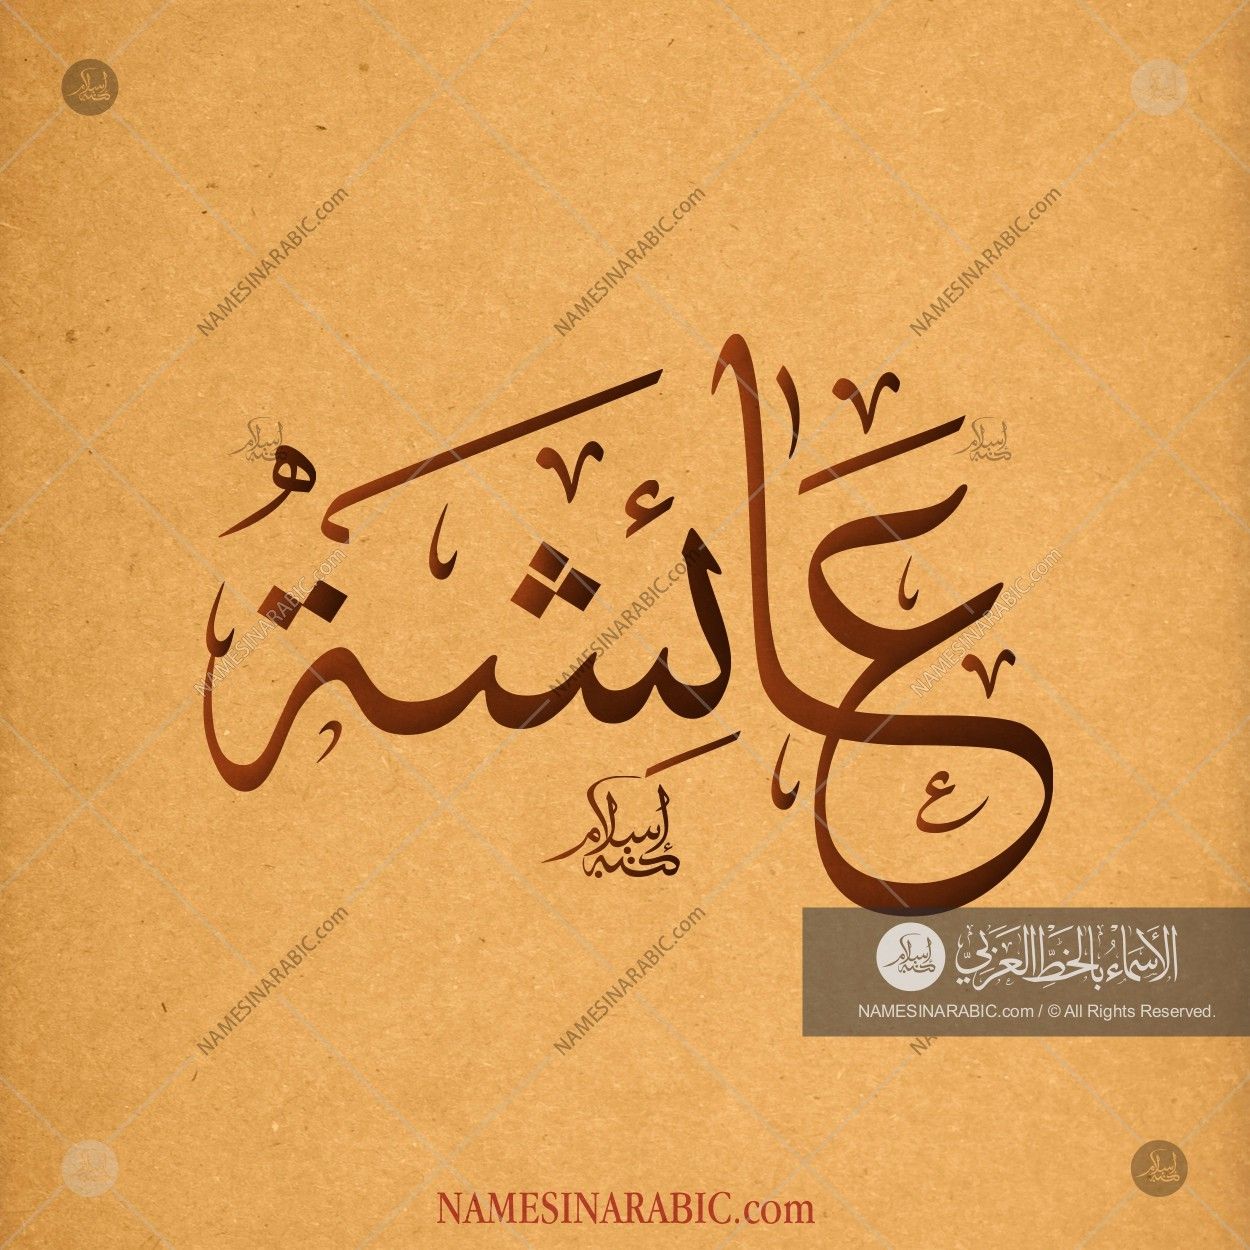 Aisha Name In Arabic - 1250x1250 Wallpaper 